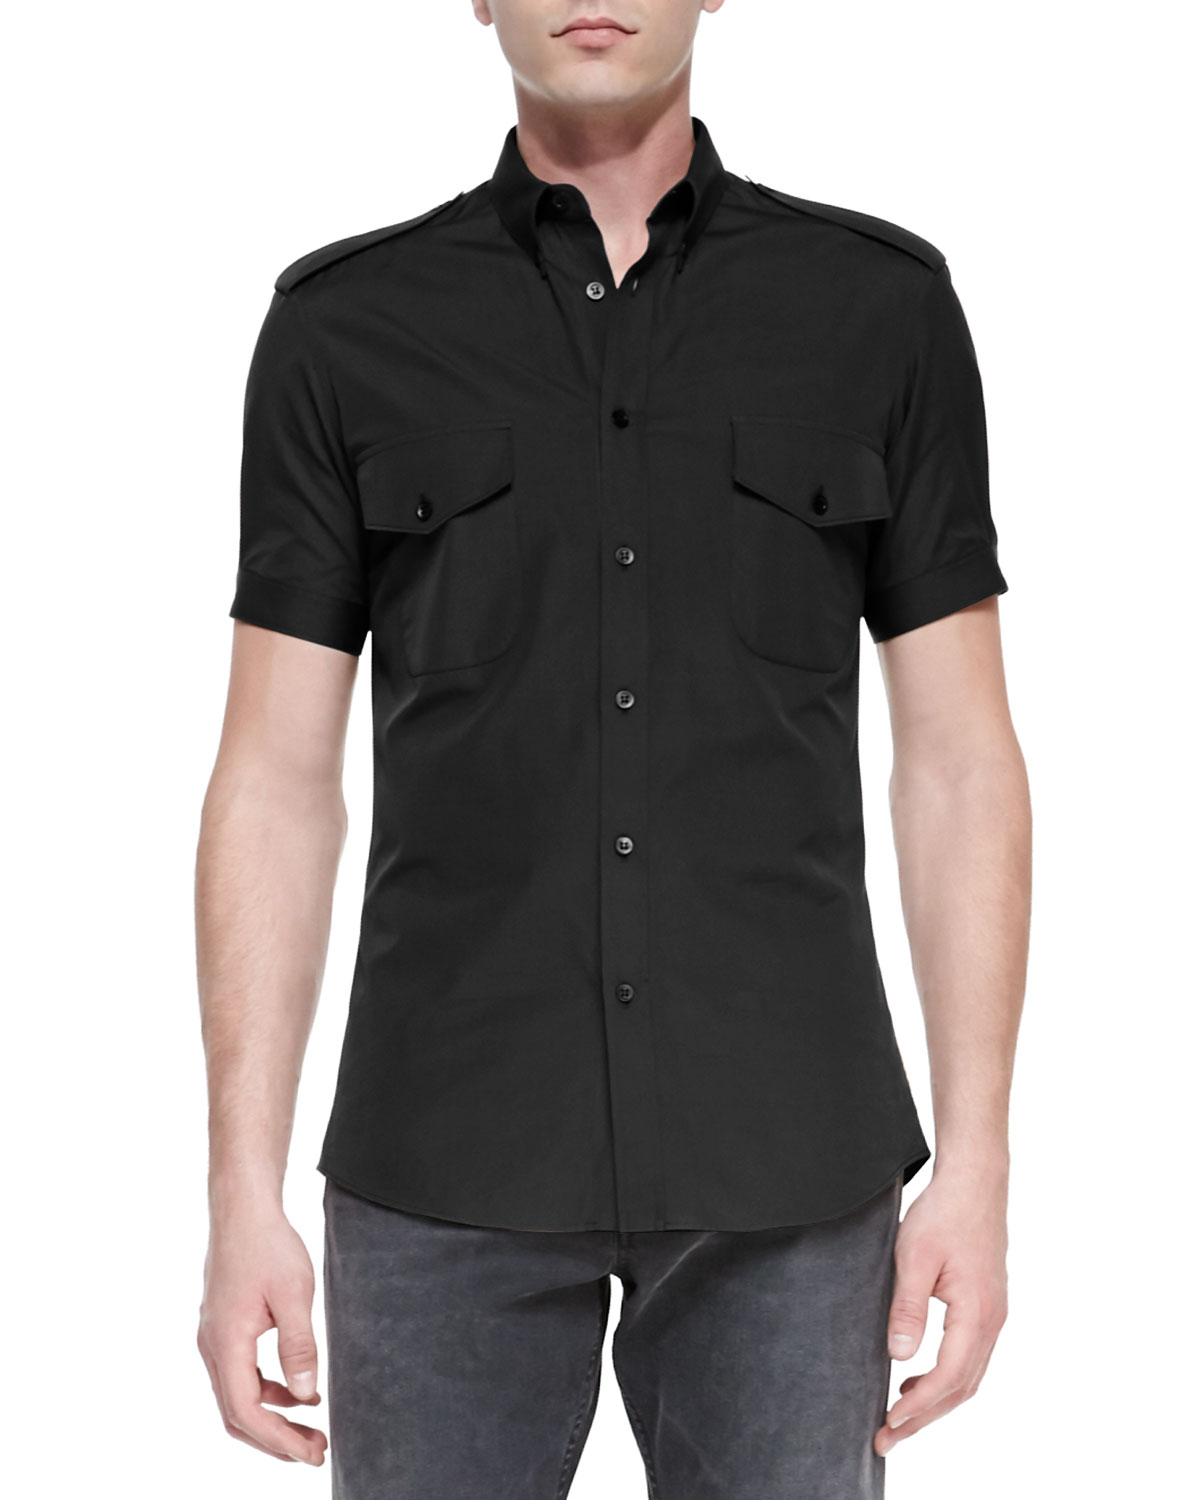 Lyst - Alexander Mcqueen Short-sleeve Military Shirt in Black for Men